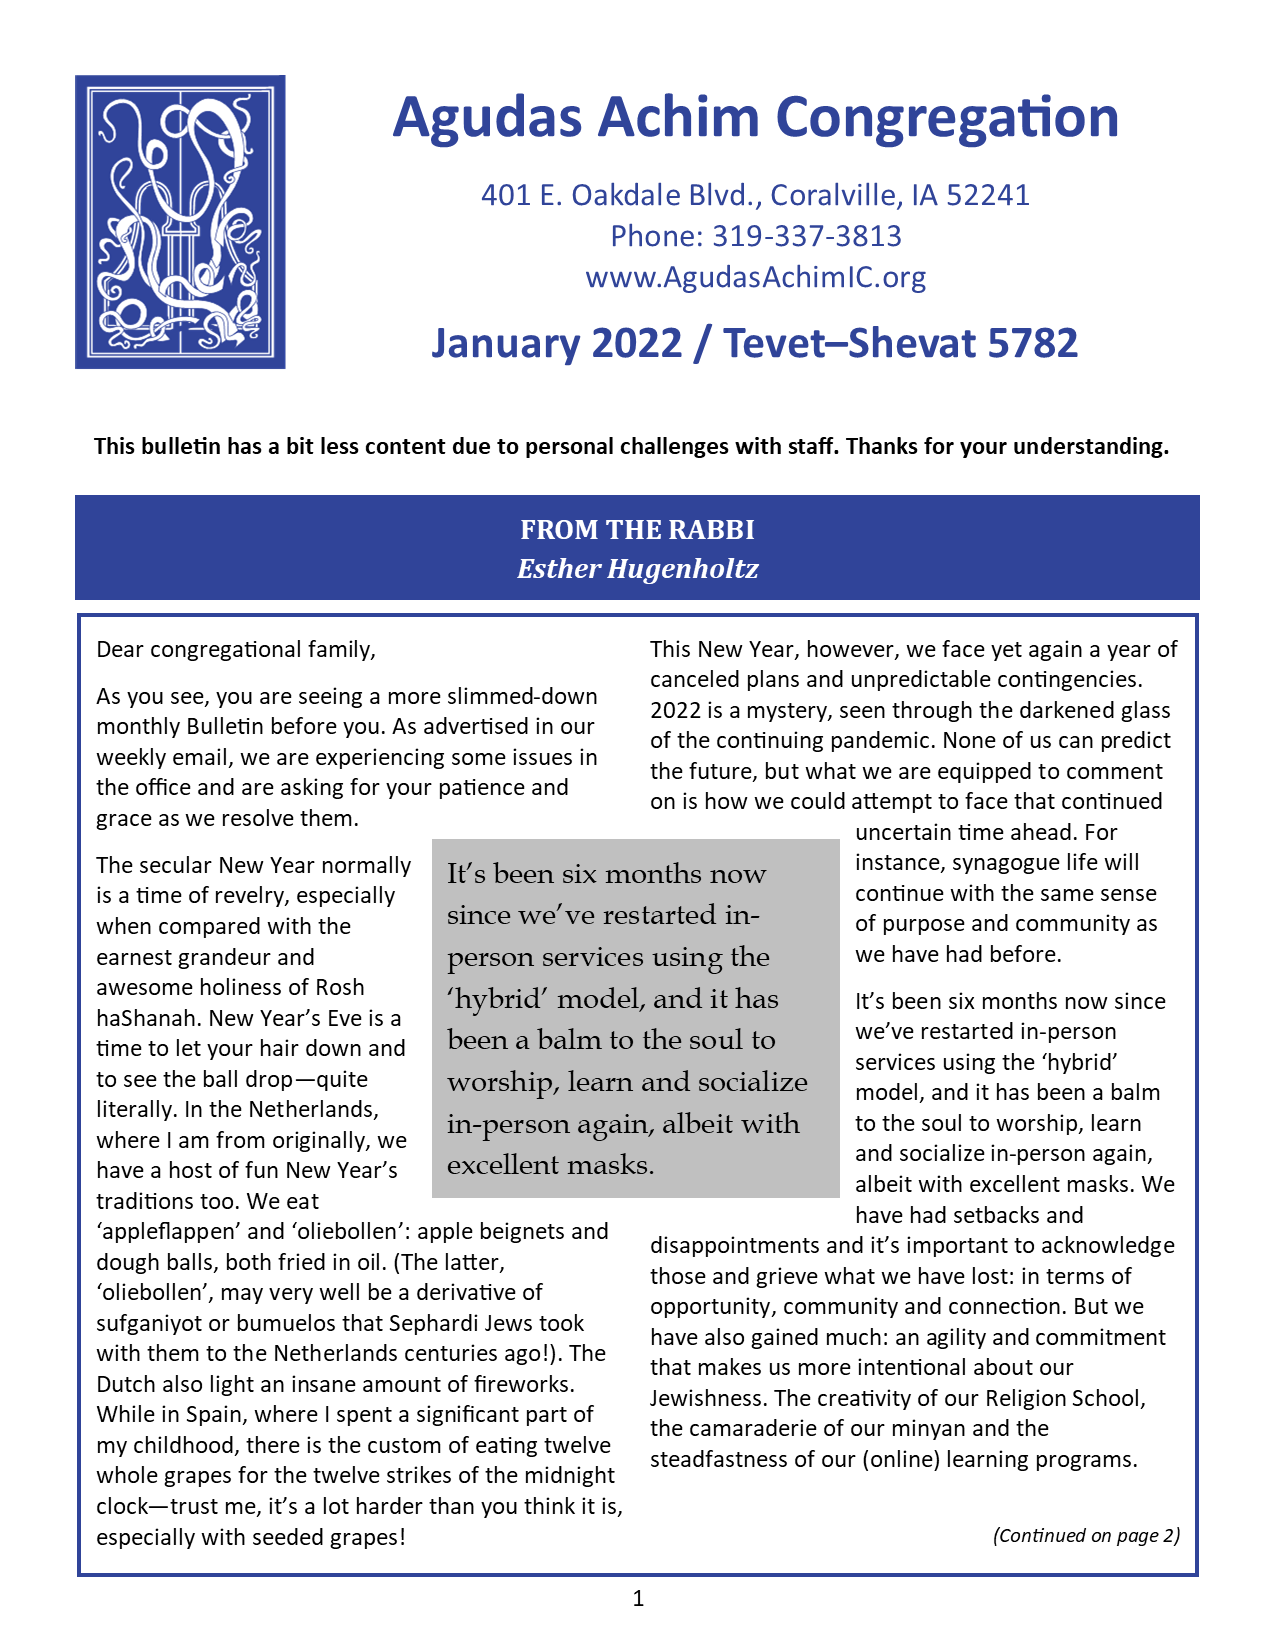 January 2022 Bulletin Cover